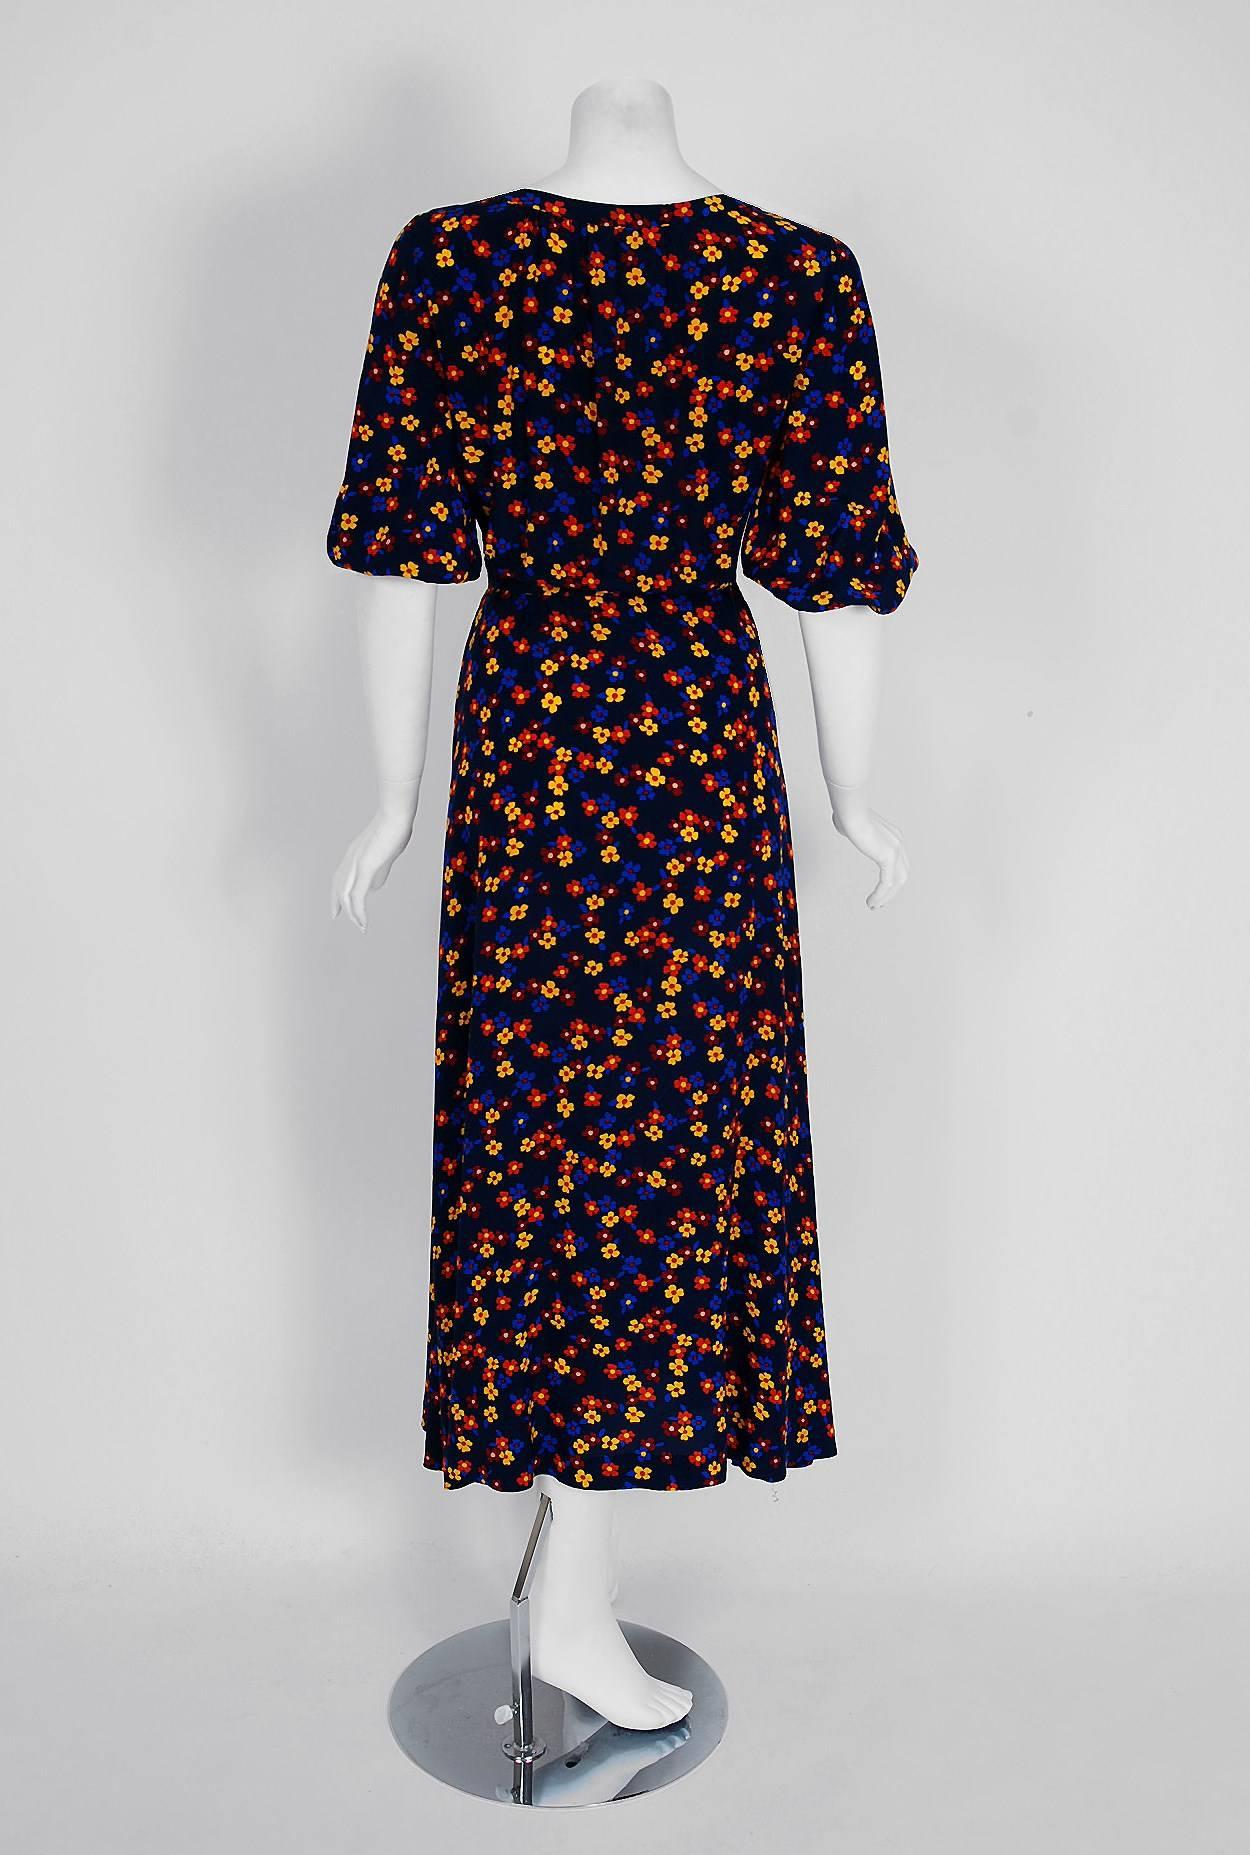 Women's 1970's Yves Saint Laurent Floral Print Navy Silk Billow-Sleeve Peasant Dress